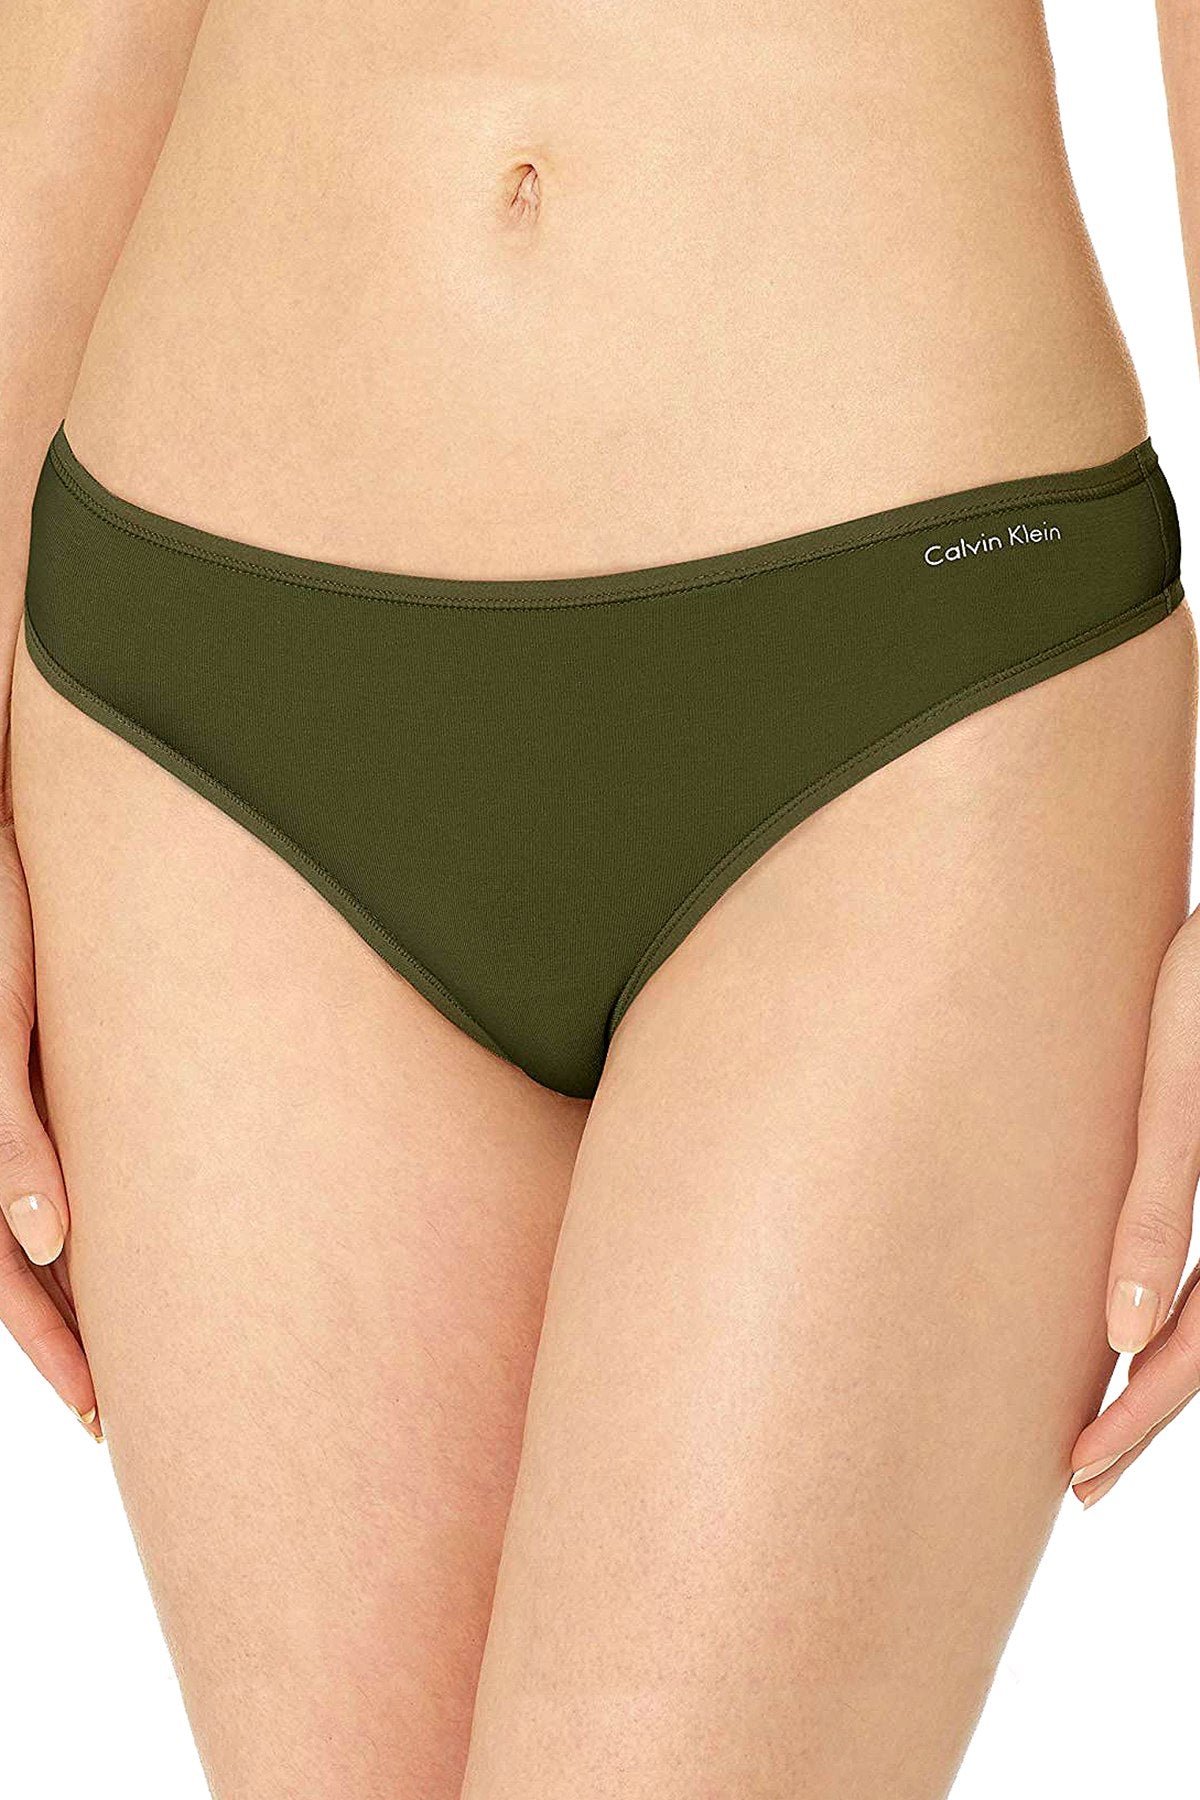 Calvin Klein Beetle-Green Form Cotton Thong